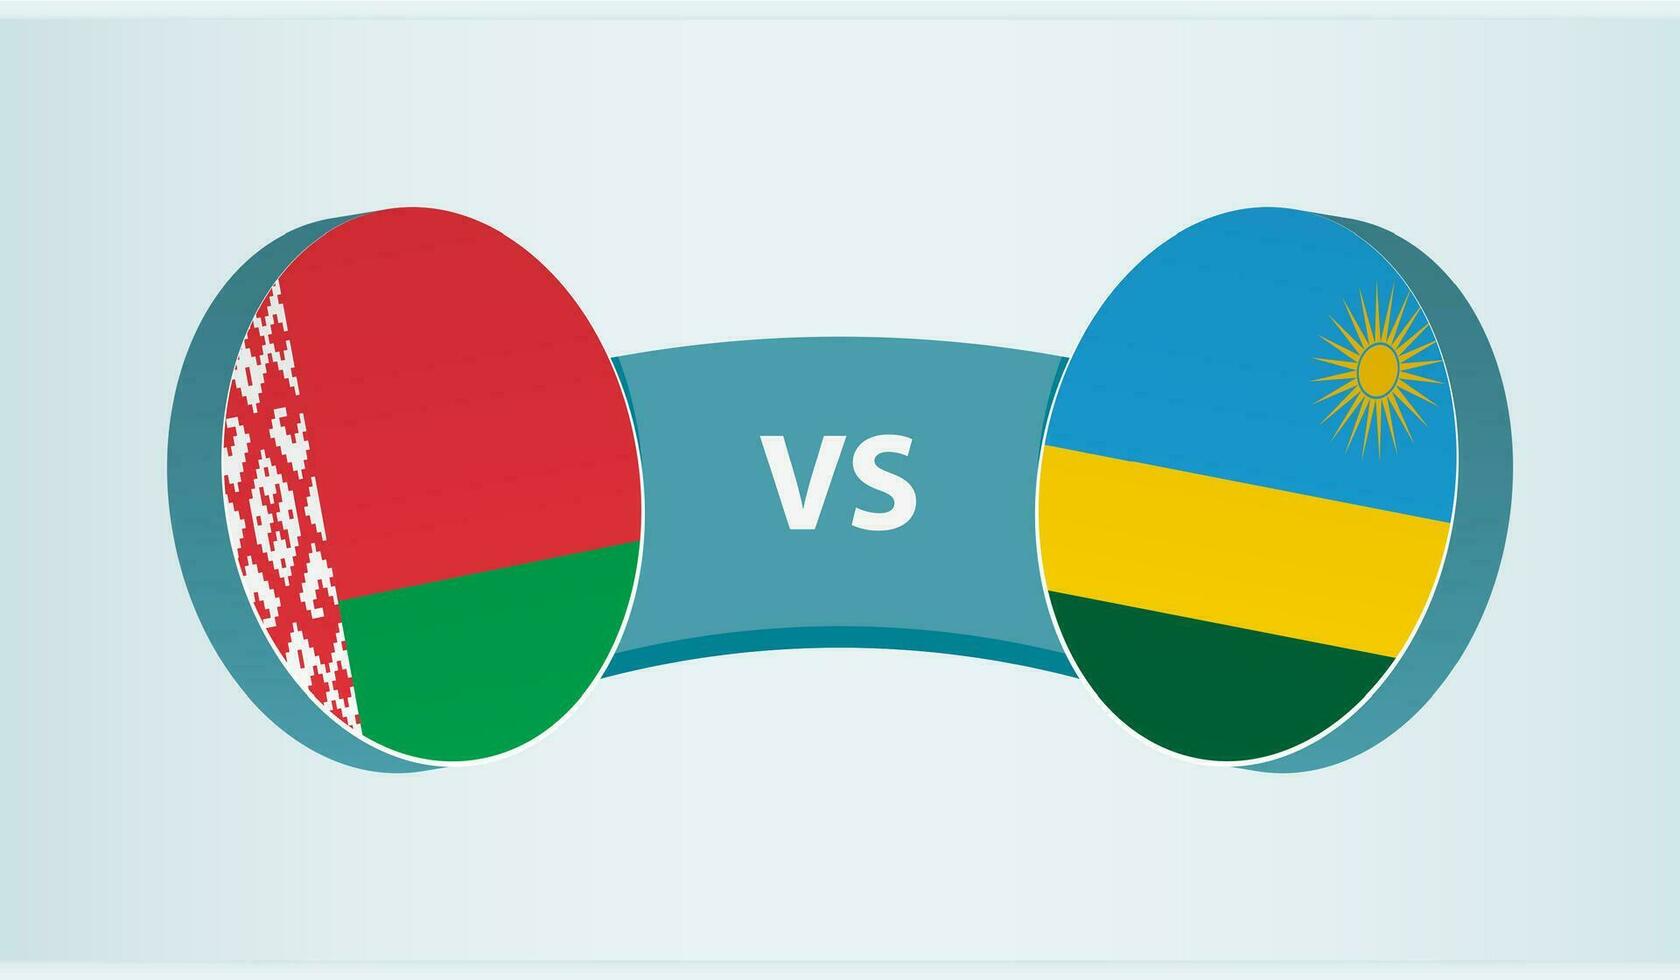 Vitryssland mot rwanda, team sporter konkurrens begrepp. vektor